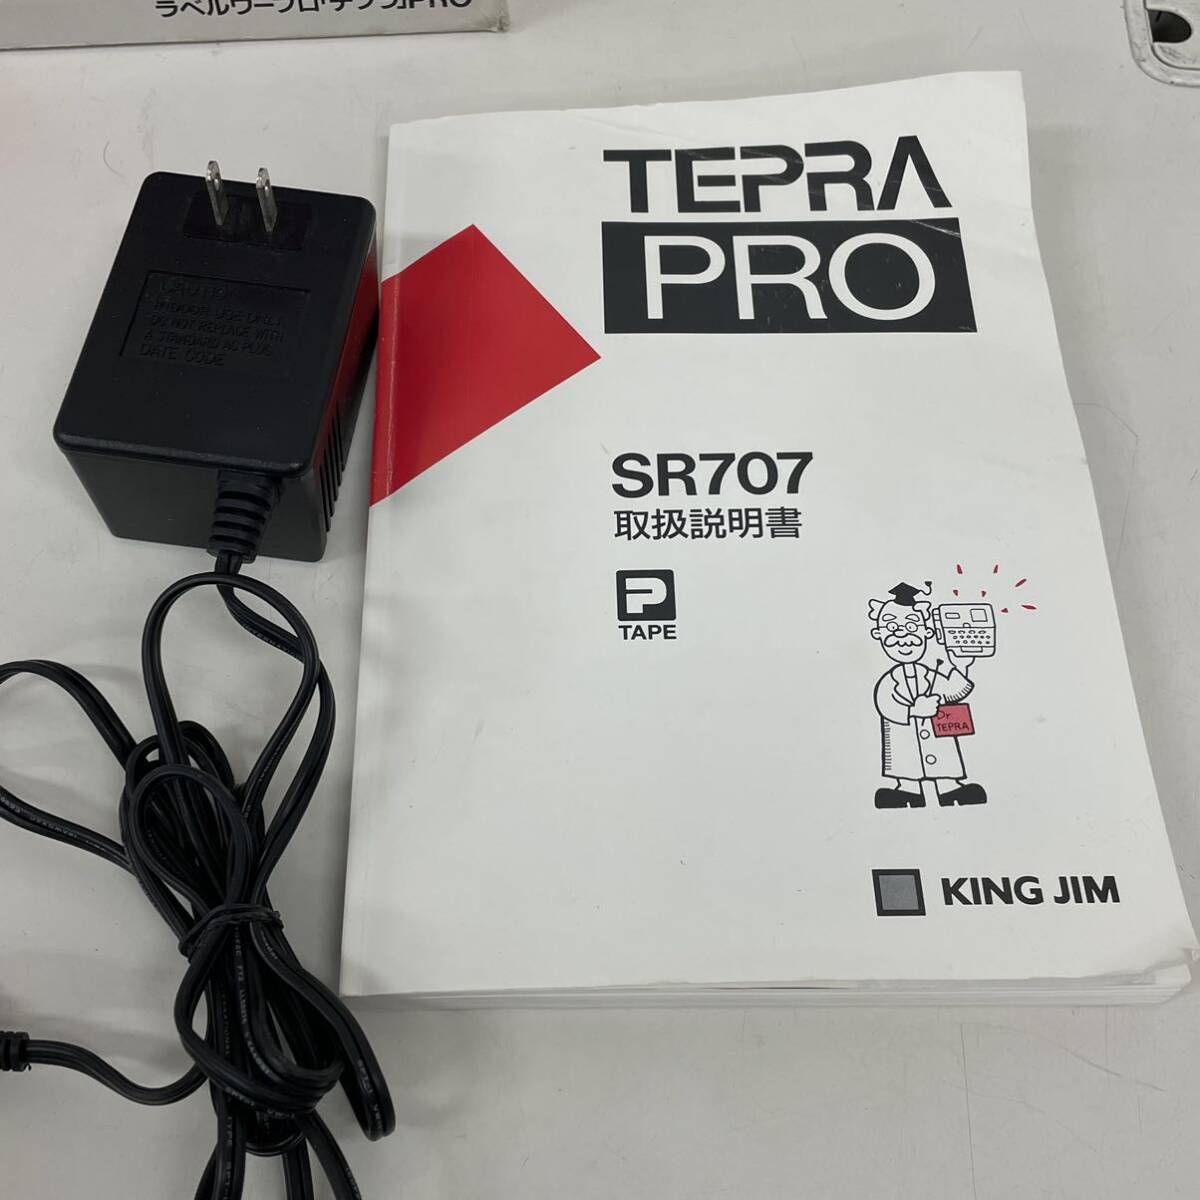 TEPRA PRO Tepra Pro SR707 KING JIM King Jim этикетка текстовой процессор Tepra текущее состояние товар 